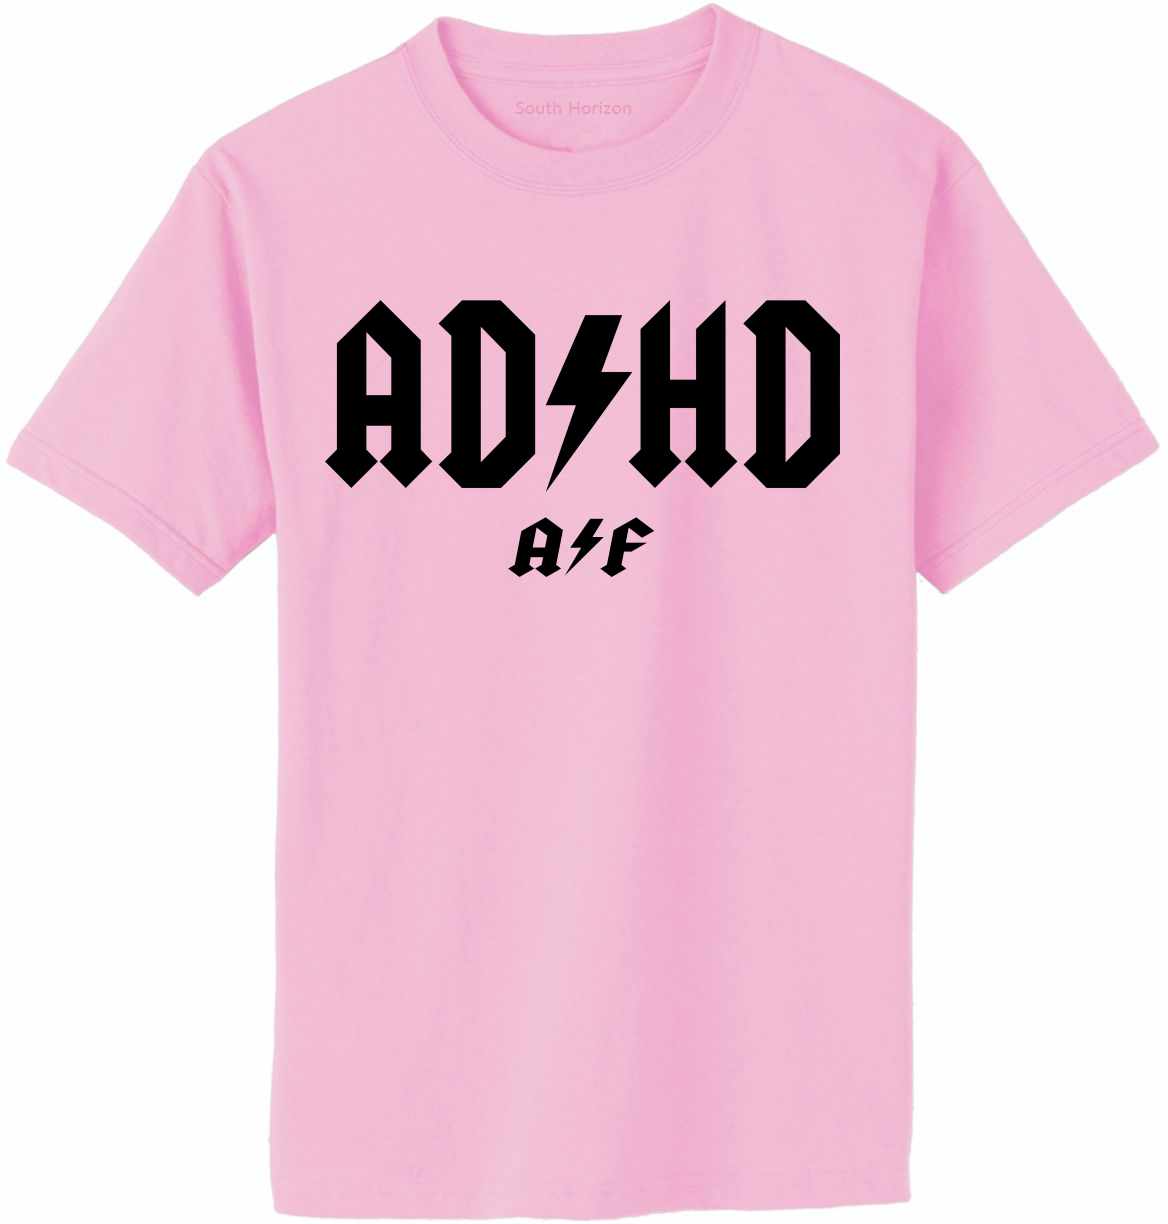 ADHD - AF on Adult T-Shirt (#1283-1)